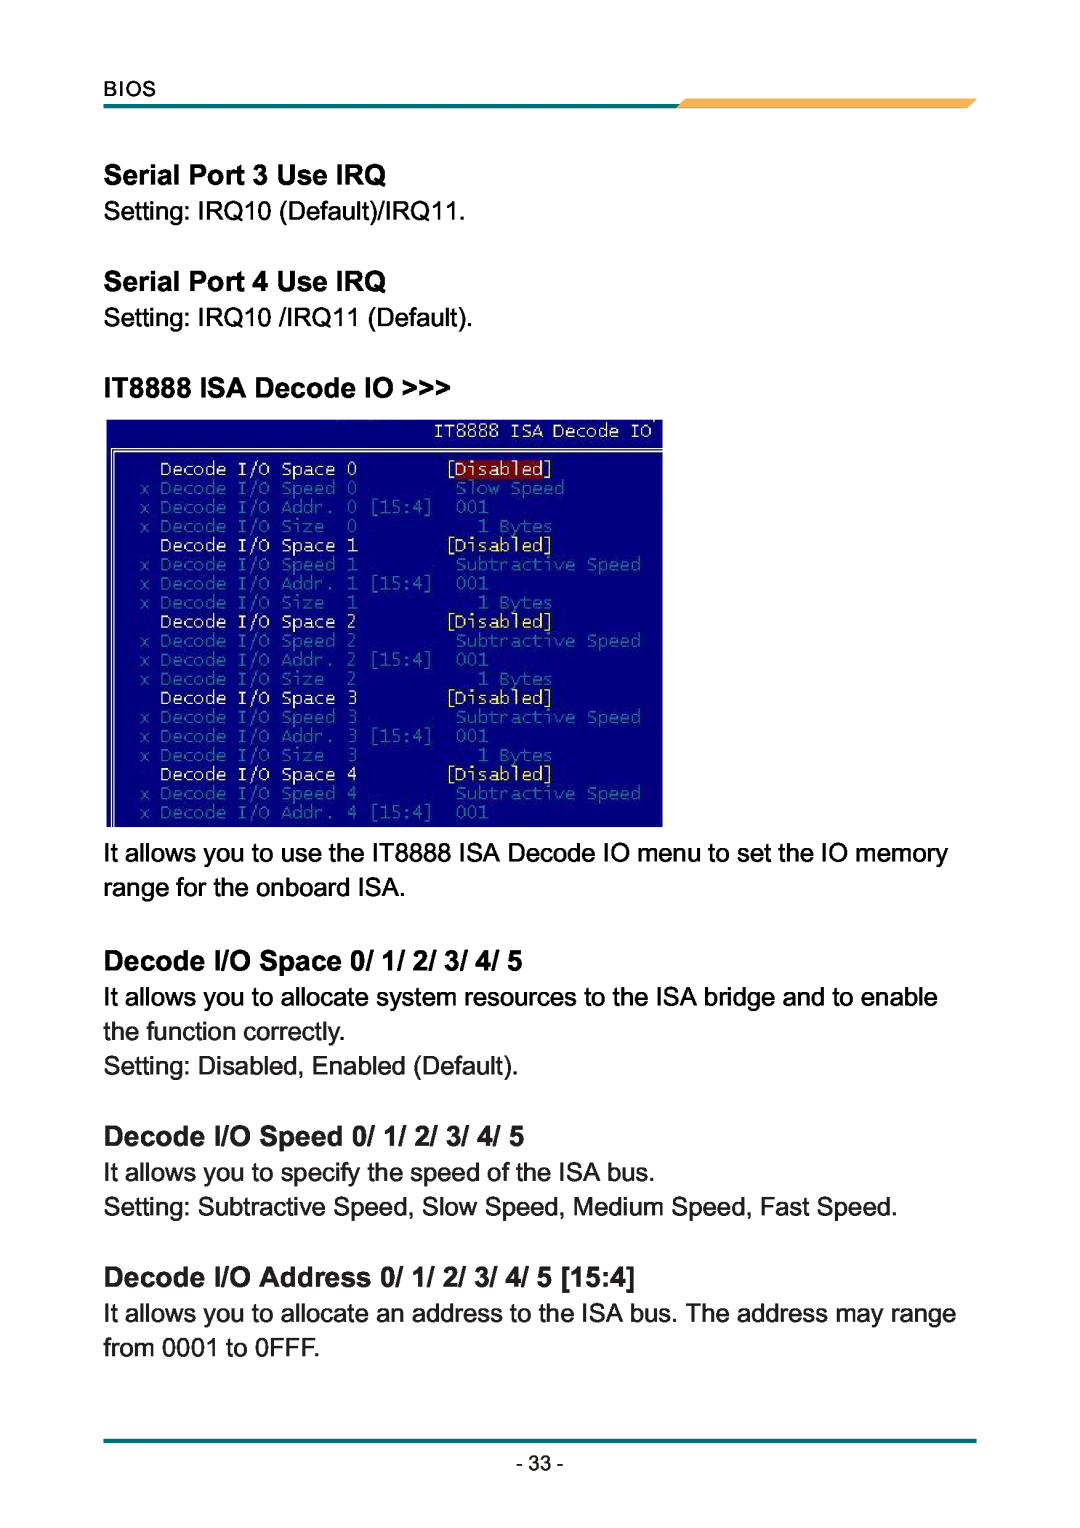 AMD SBX-5363 manual Serial Port 3 Use IRQ, Serial Port 4 Use IRQ, IT8888 ISA Decode IO, Decode I/O Space 0/ 1/ 2/ 3/ 4 